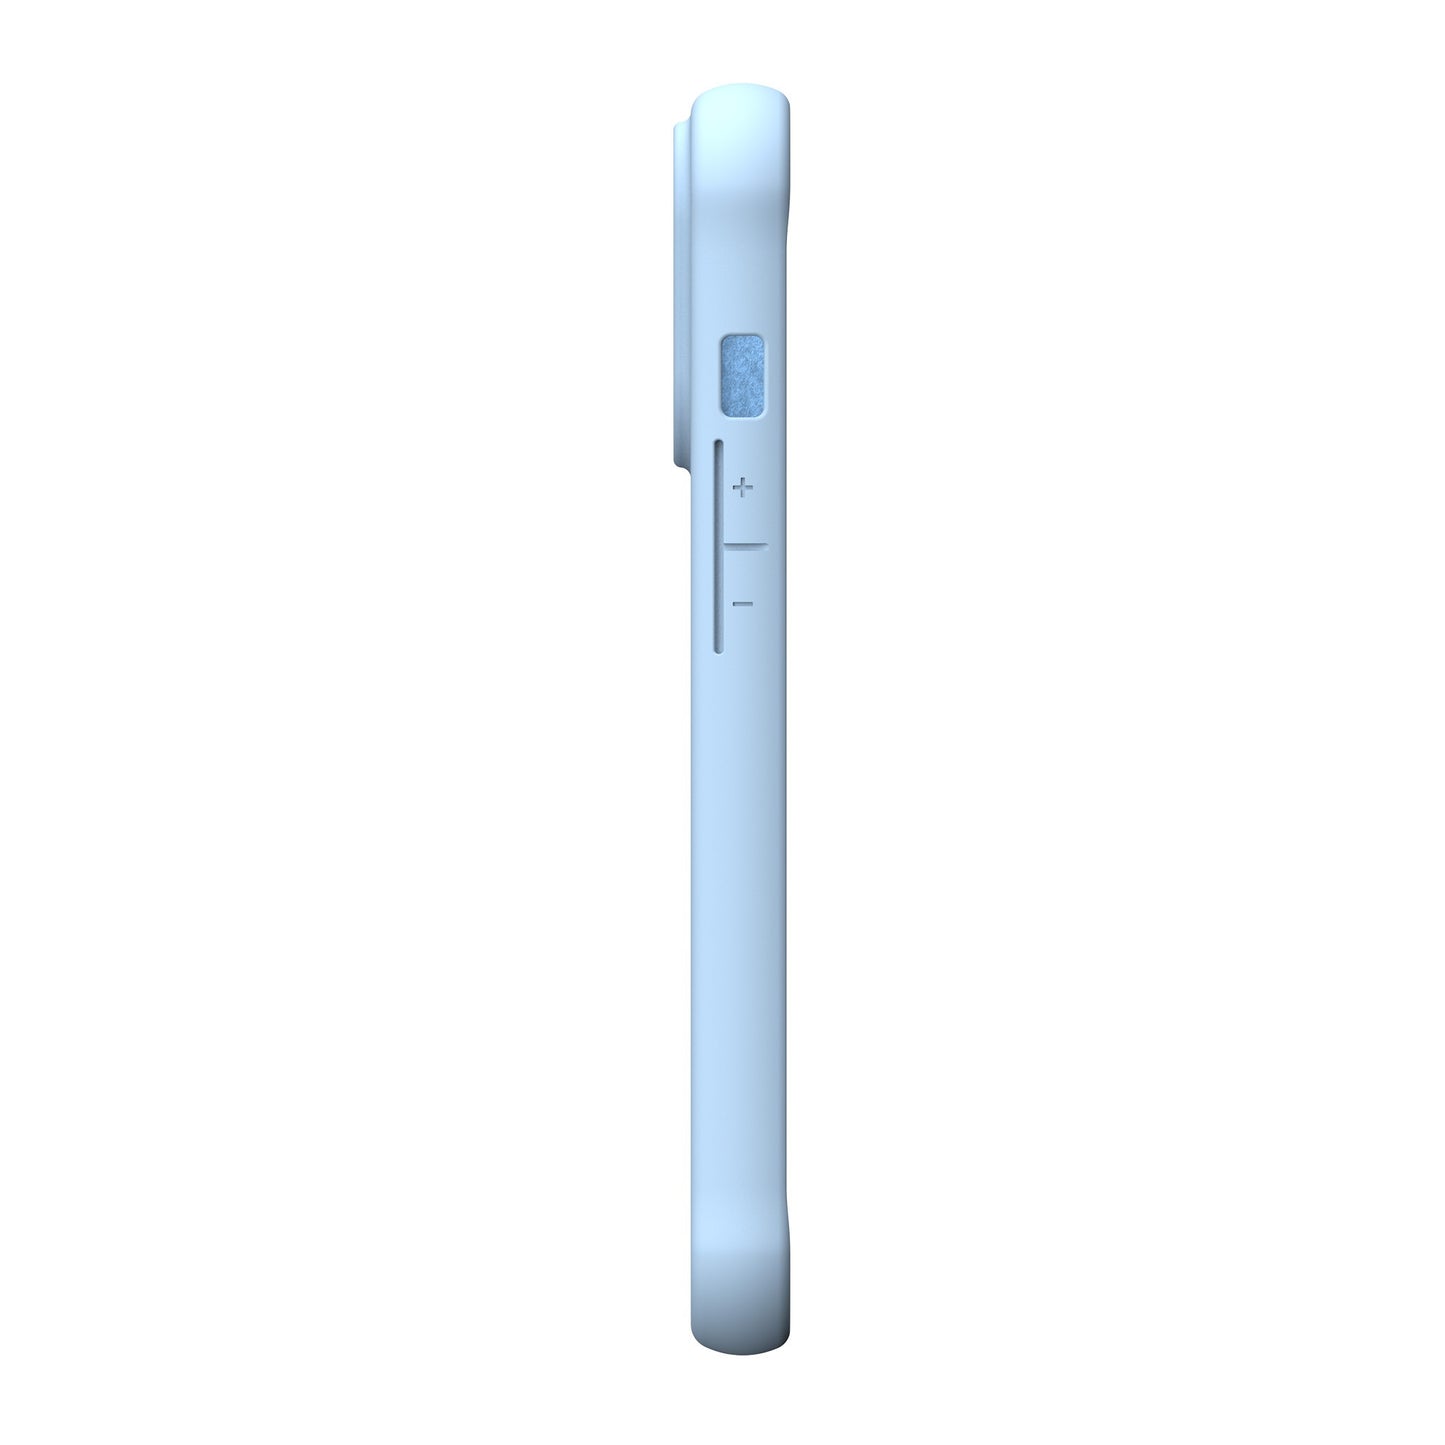 iPhone 13 Pro UAG Blue (Cerulean) Dot Case - 15-08978